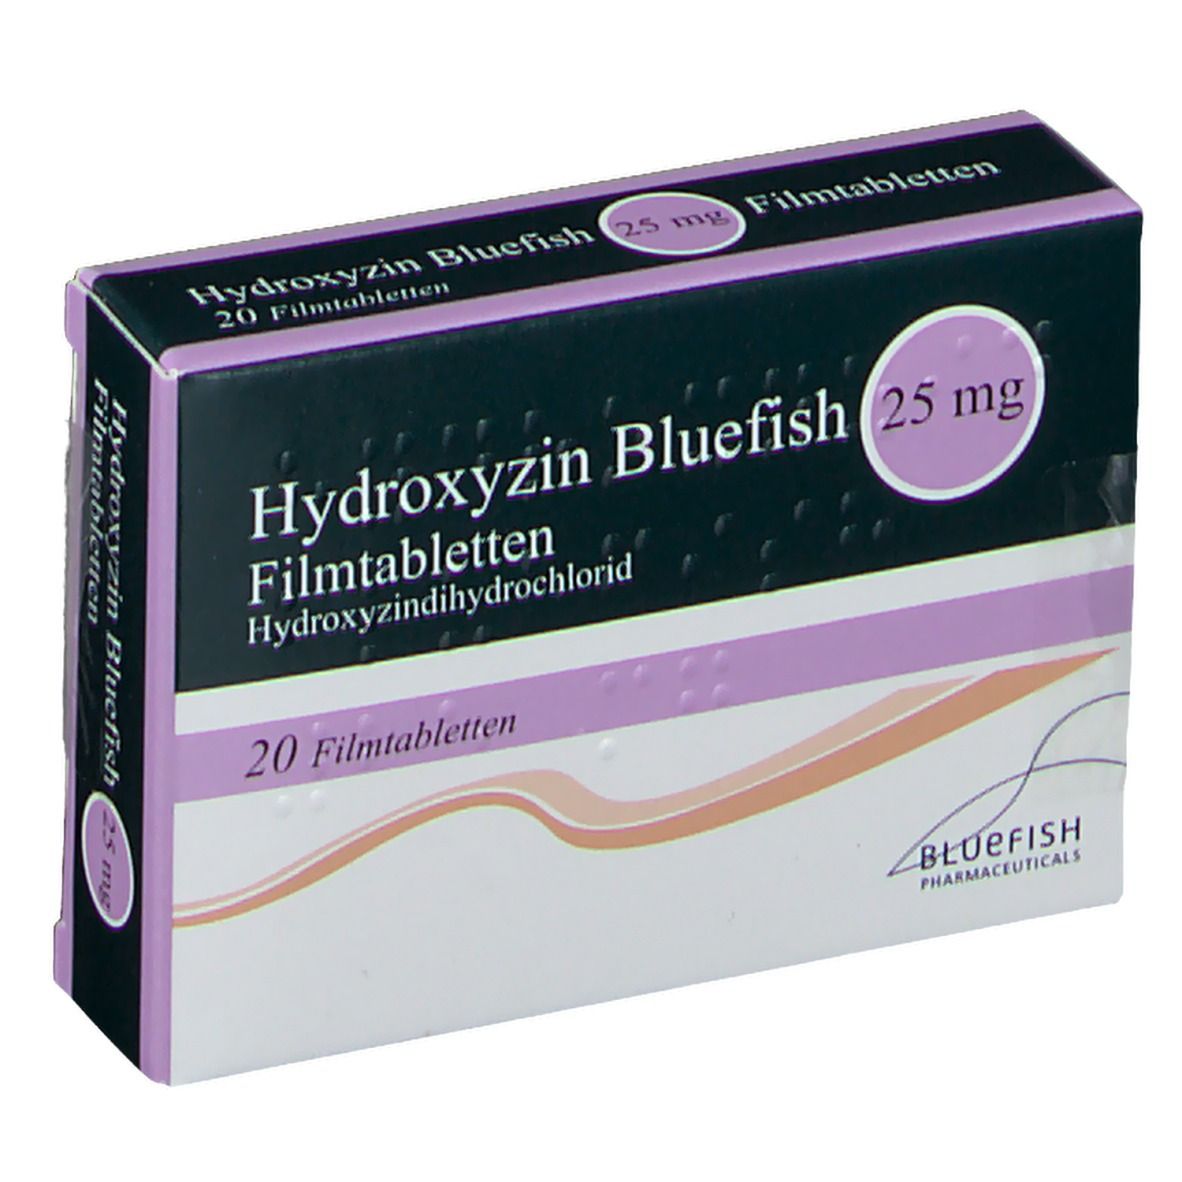 Hydroxyzin Bluefish 25 mg